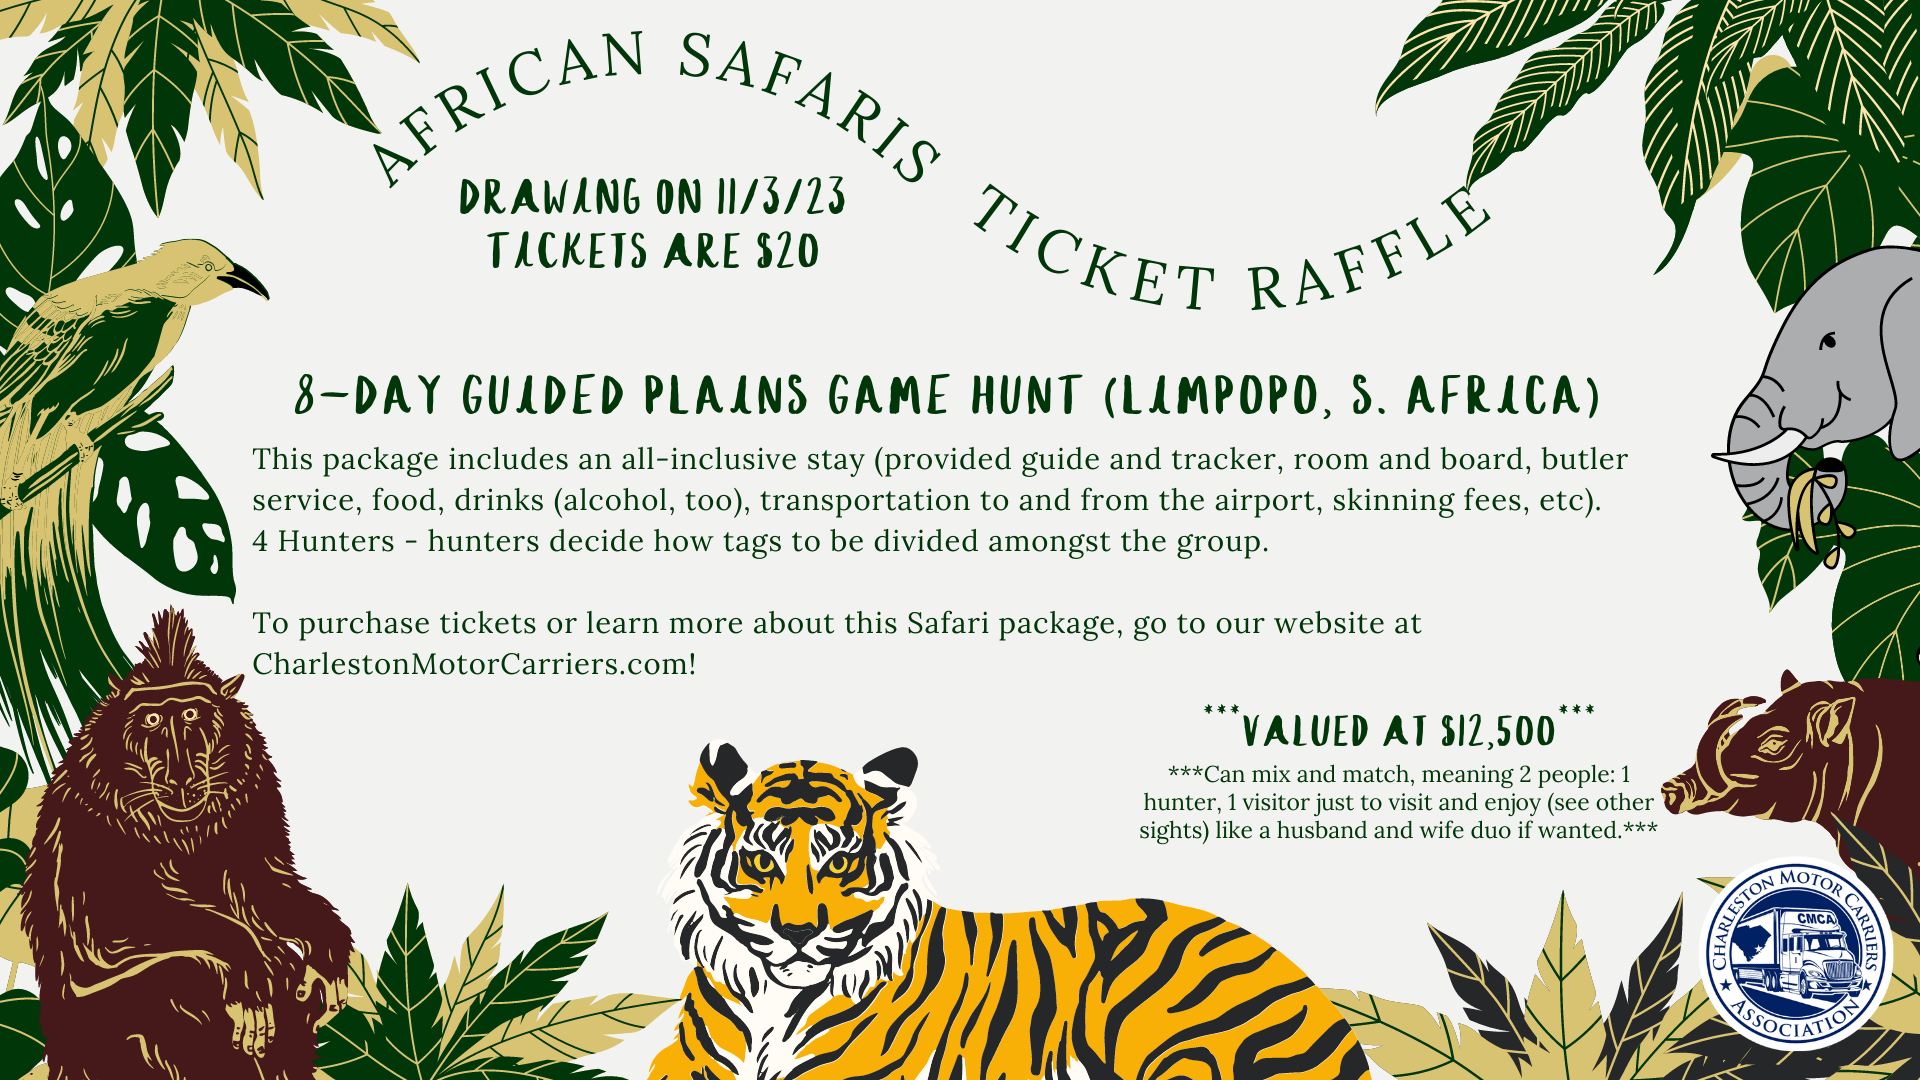 African Safari Ticket Raffle